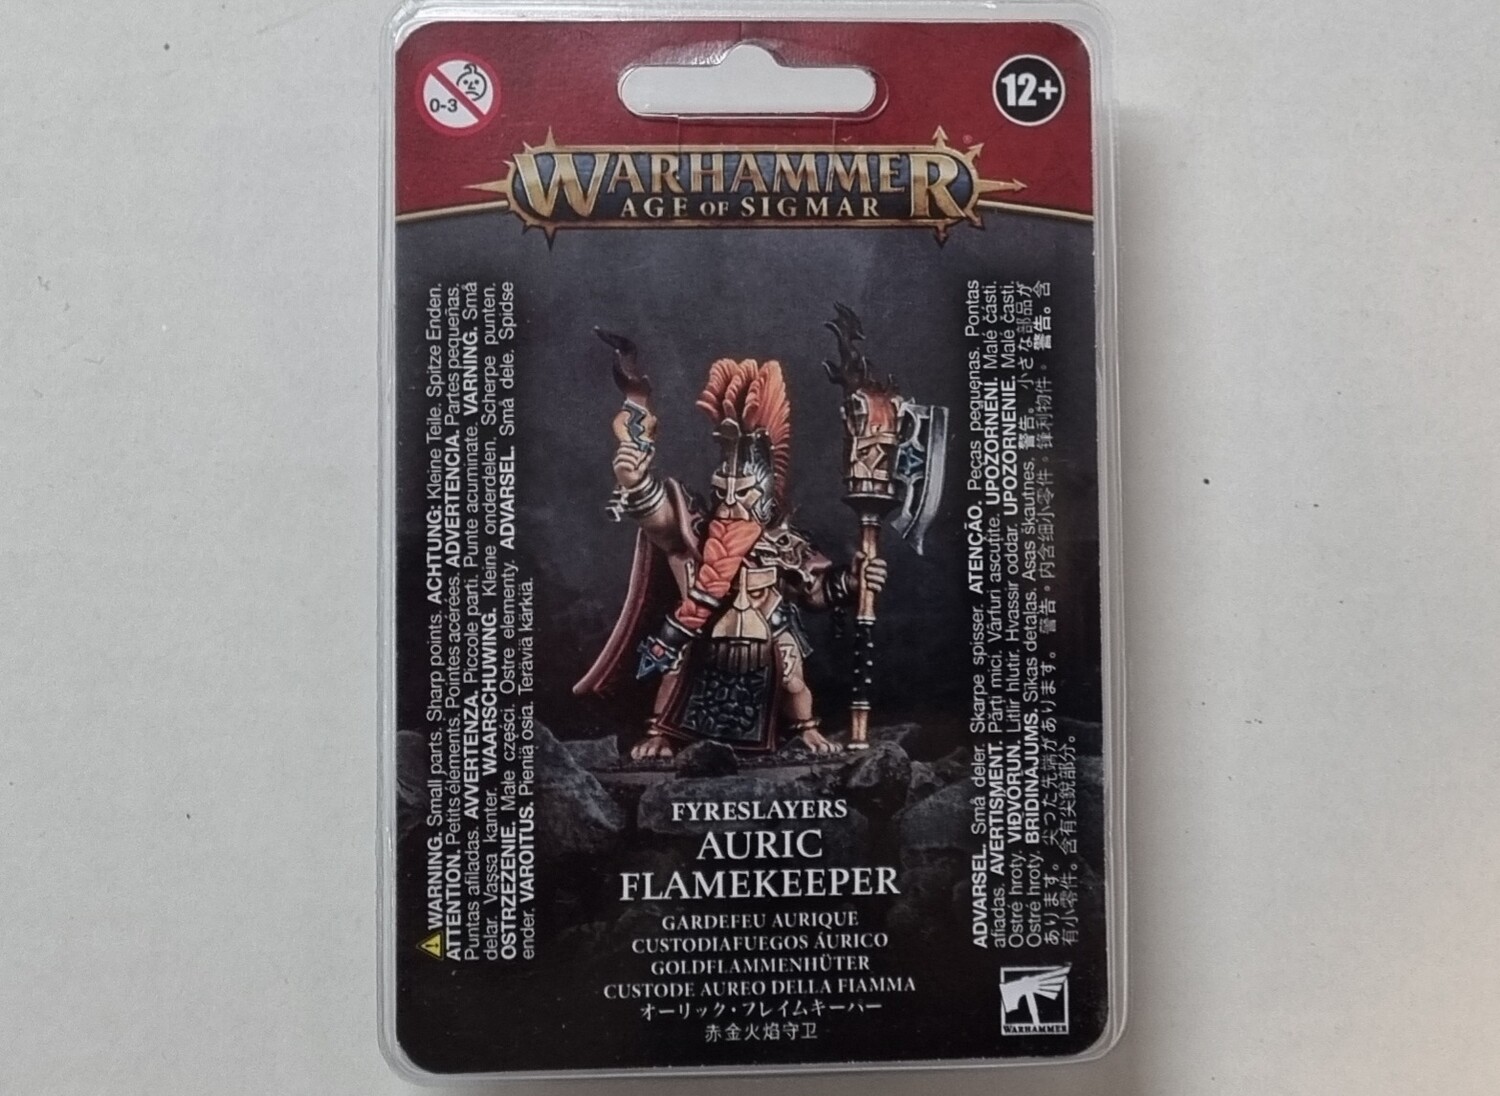 Warhammer, Age of Sigmar, Fyreslayers: Auric Flamekeeper